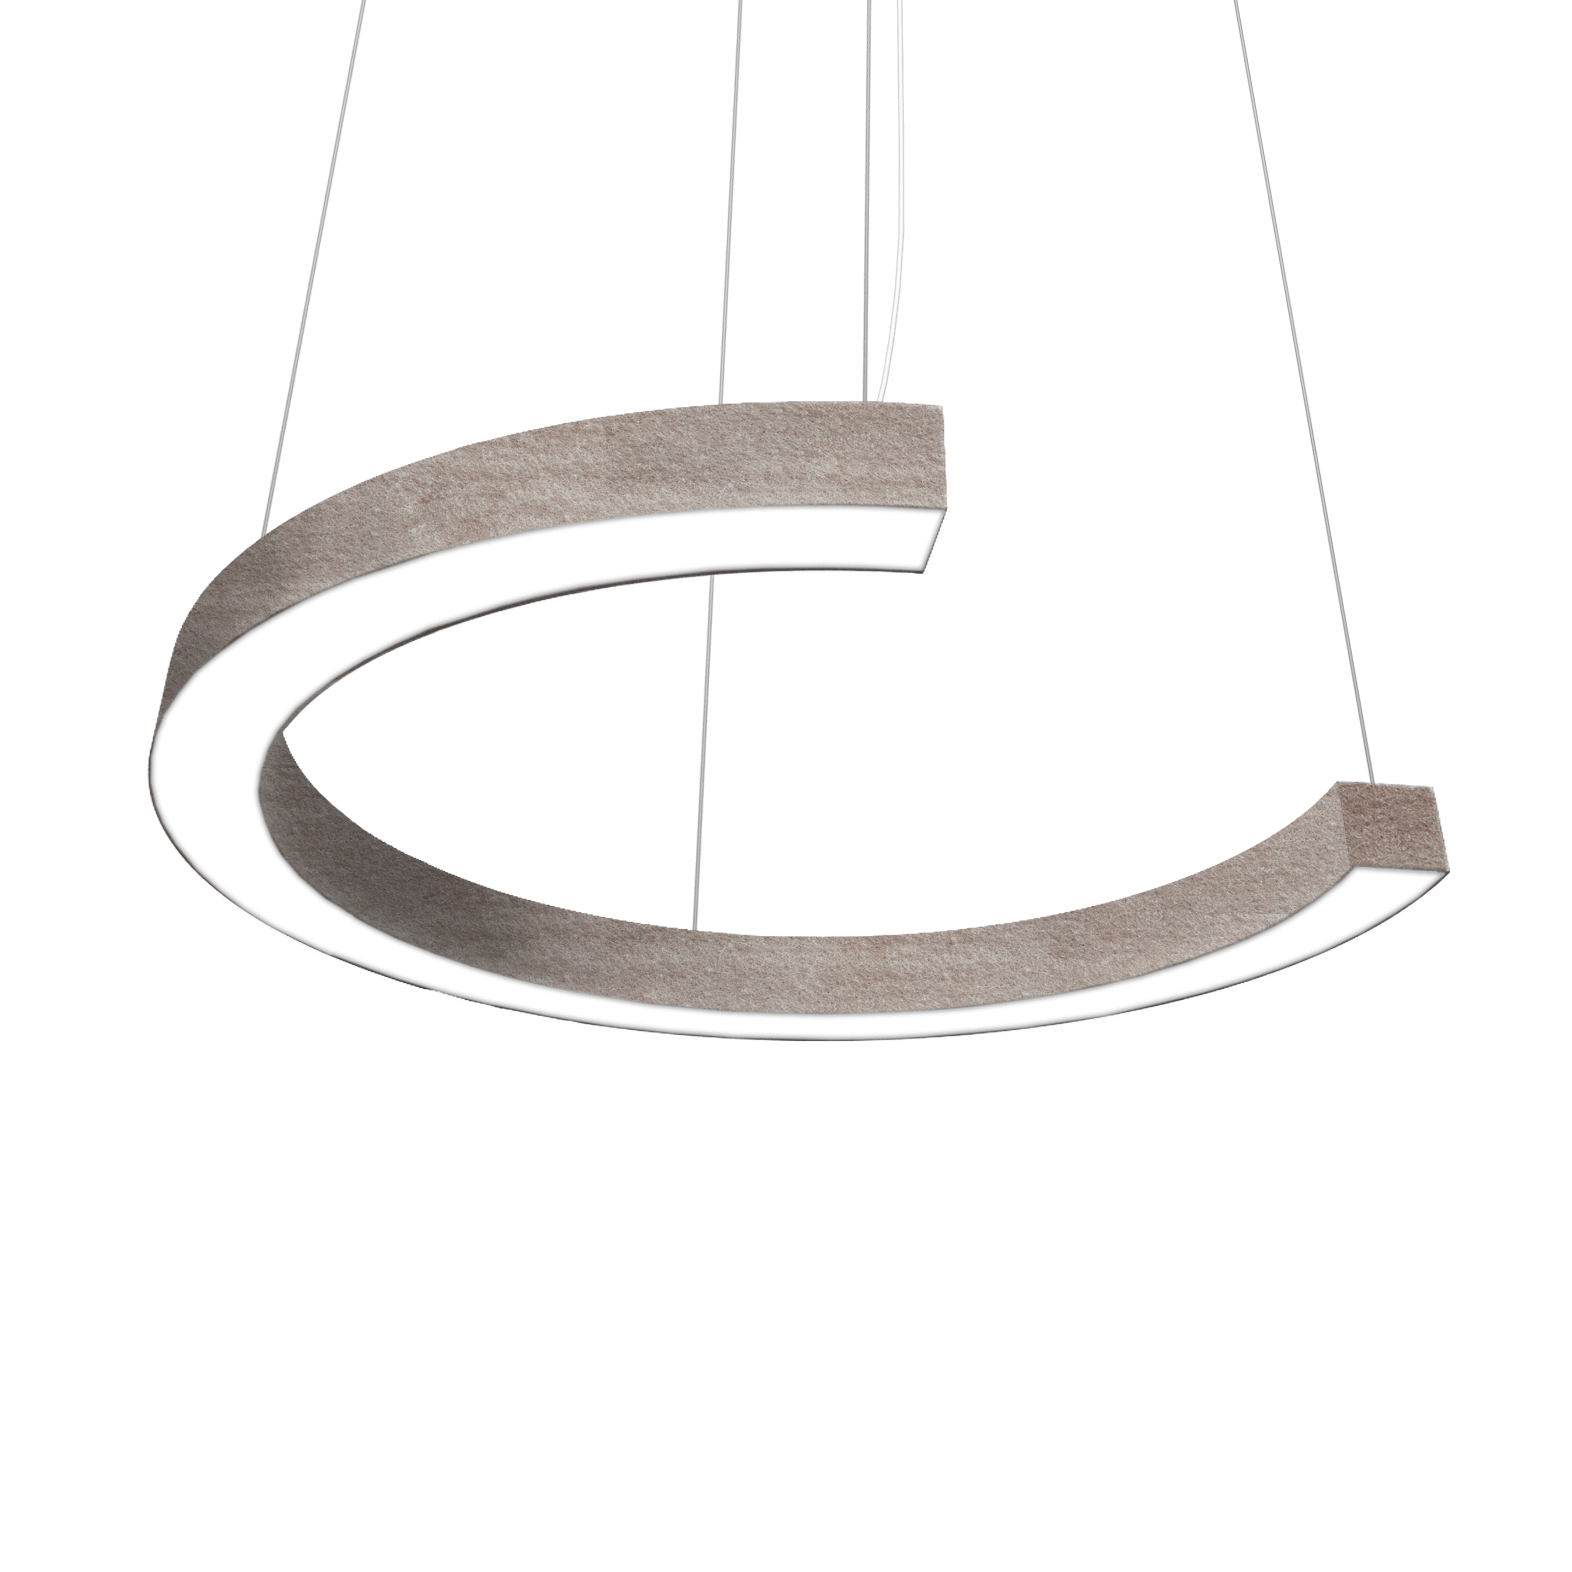 c shaped LED pendant fixture with tan felt texture